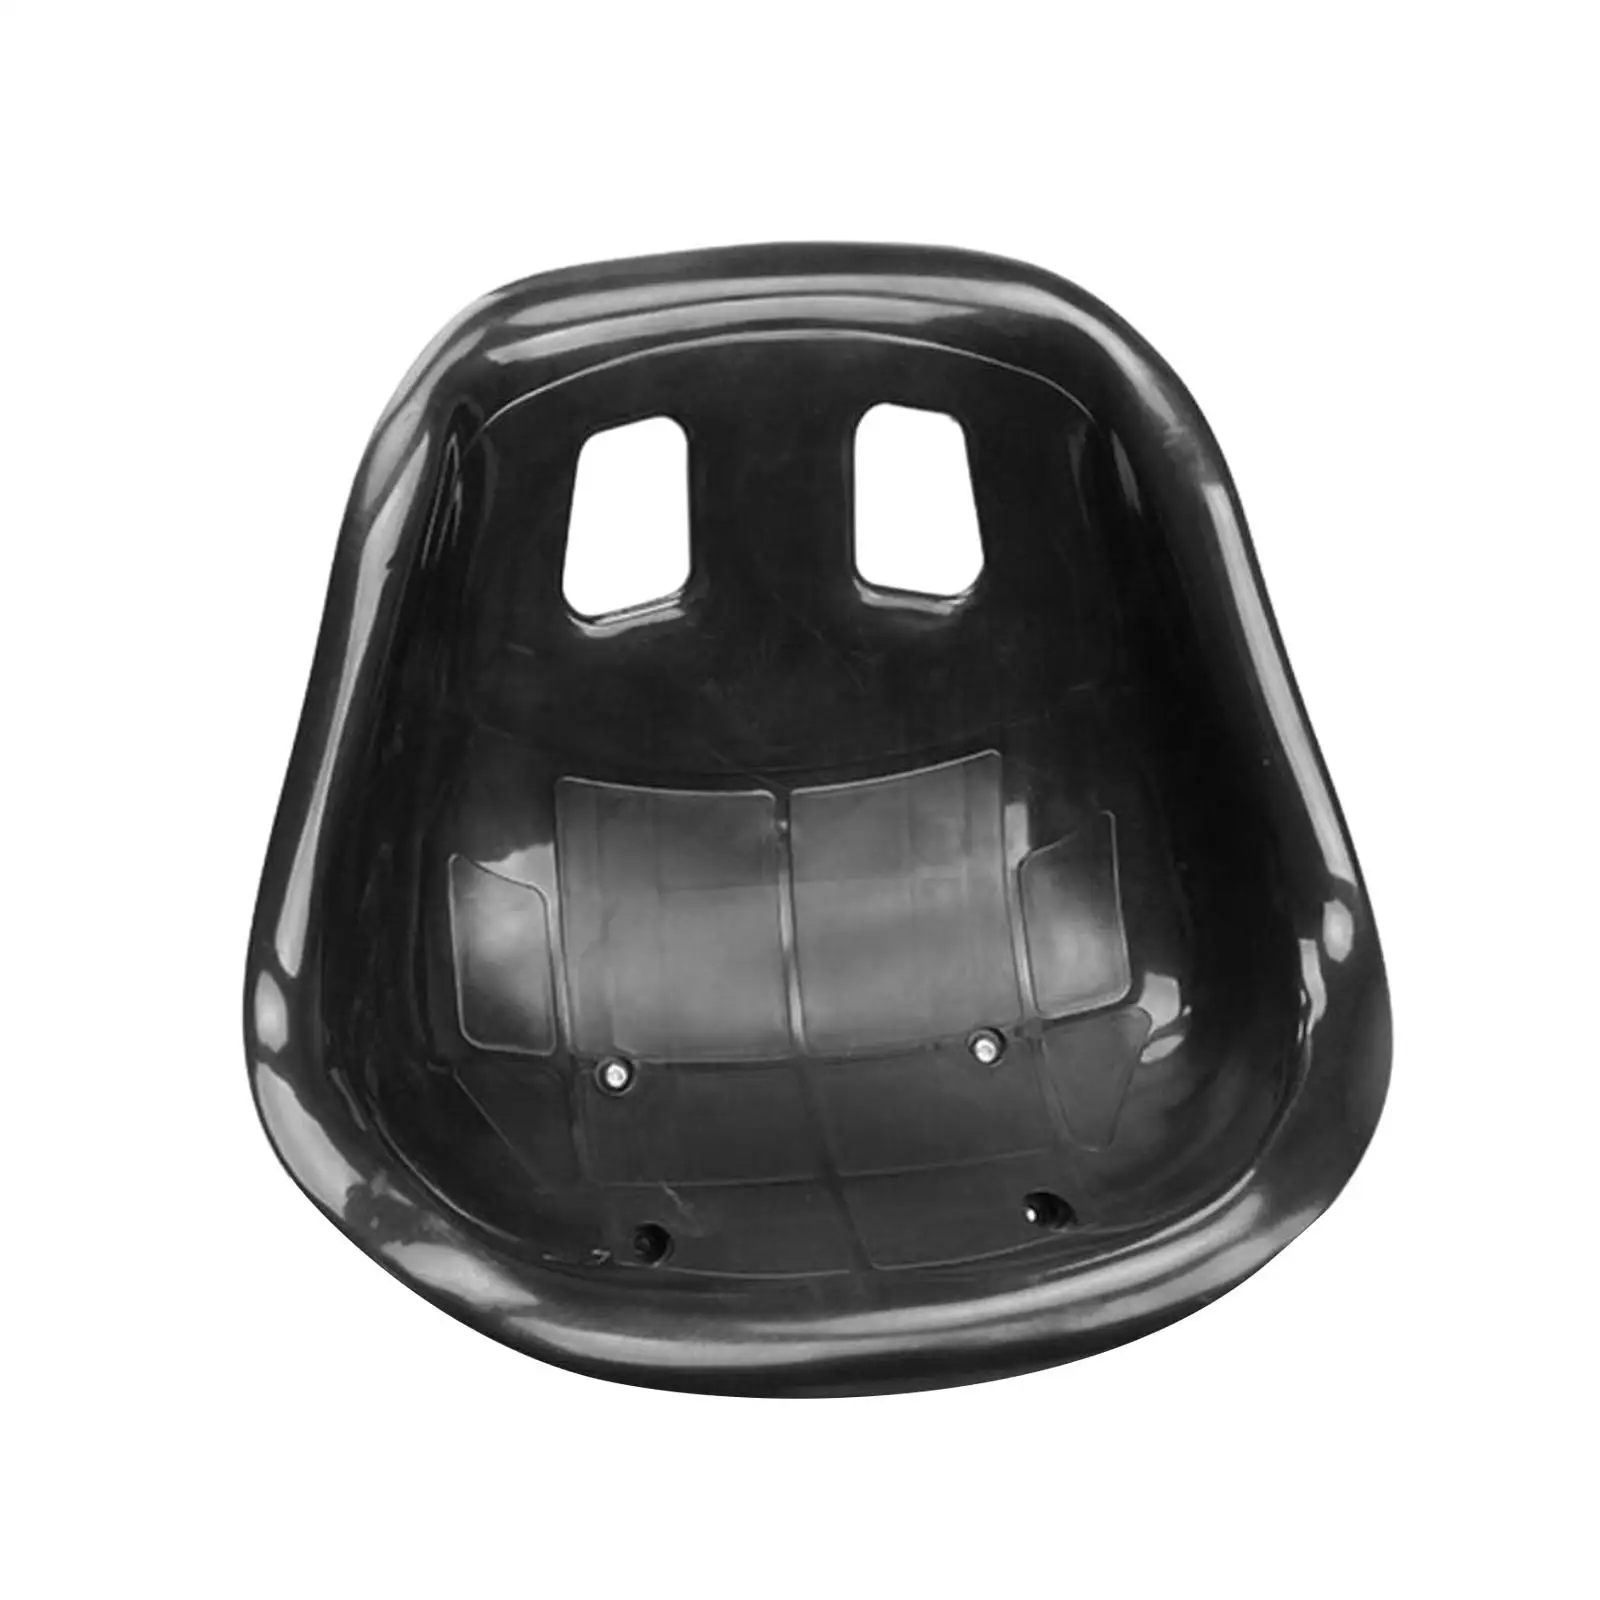 Go Kart Car Seat Saddle Accessories Black Replace Kart Car Saddle DIY for Balancing Vehicle Drift Cart Seat Kart Go Seat